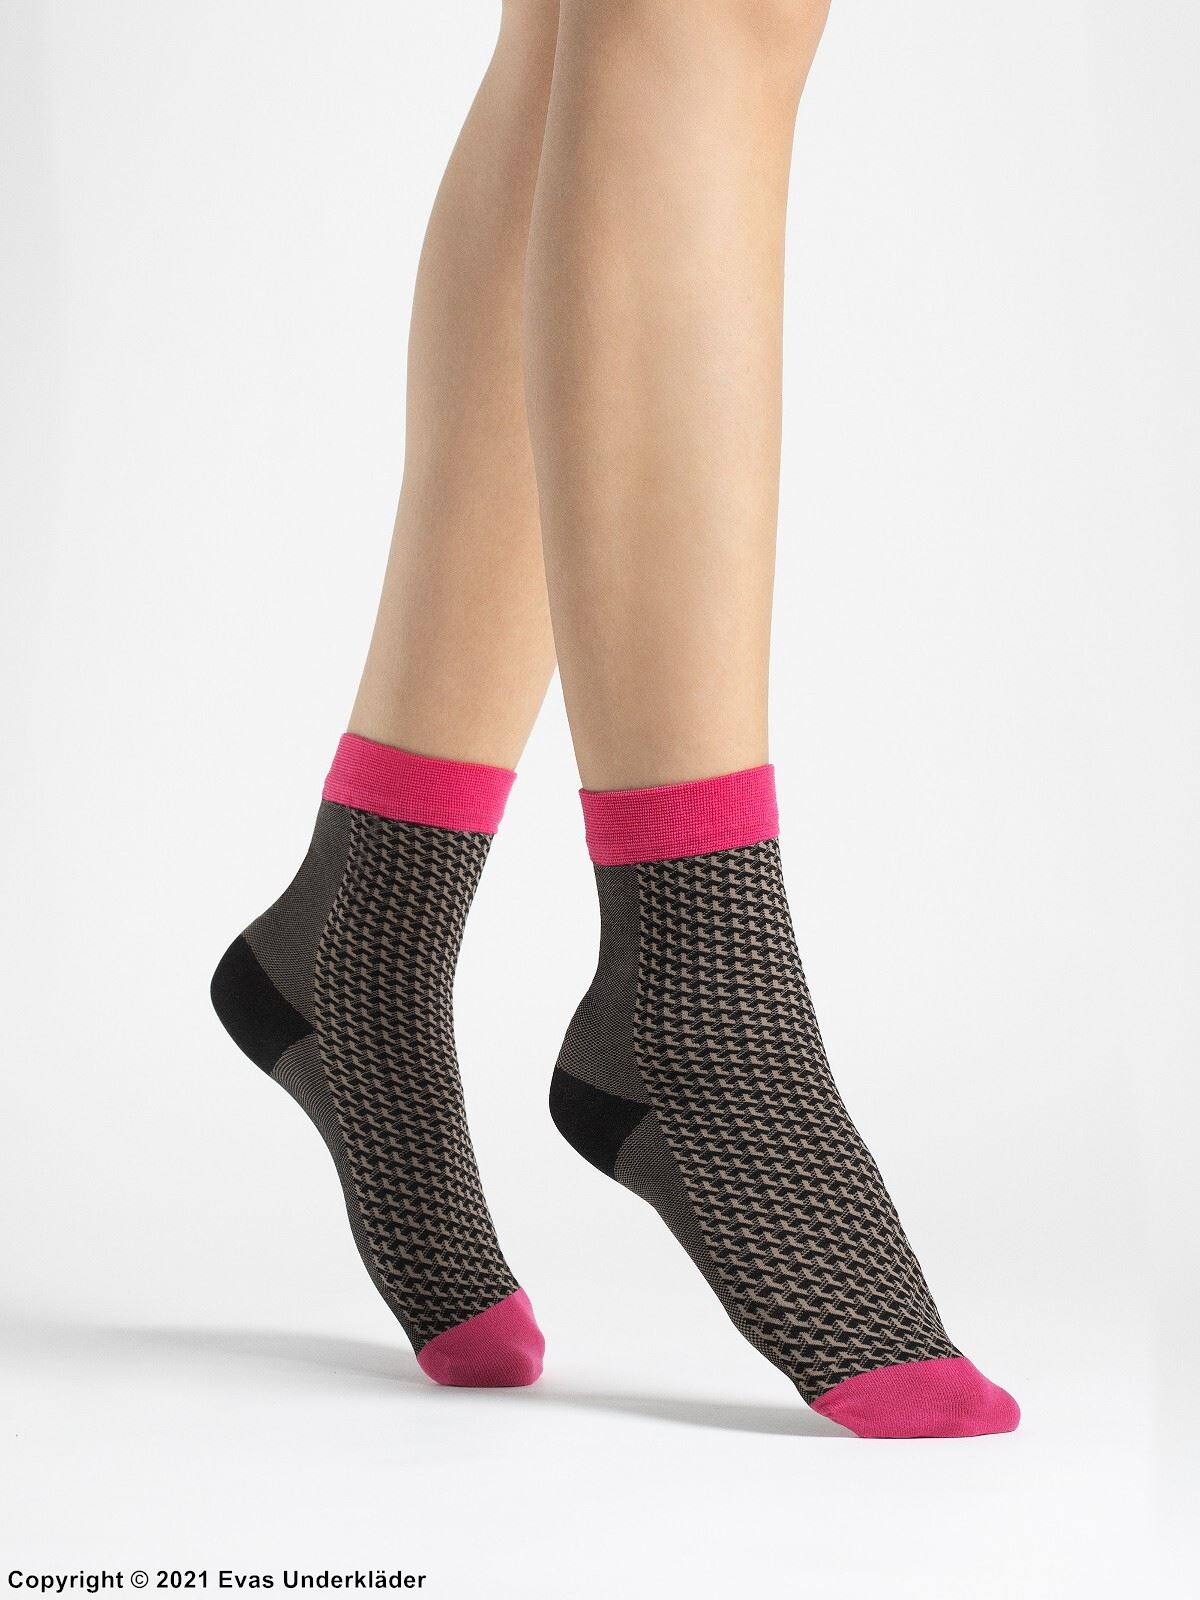 Ankle socks, intricate pattern